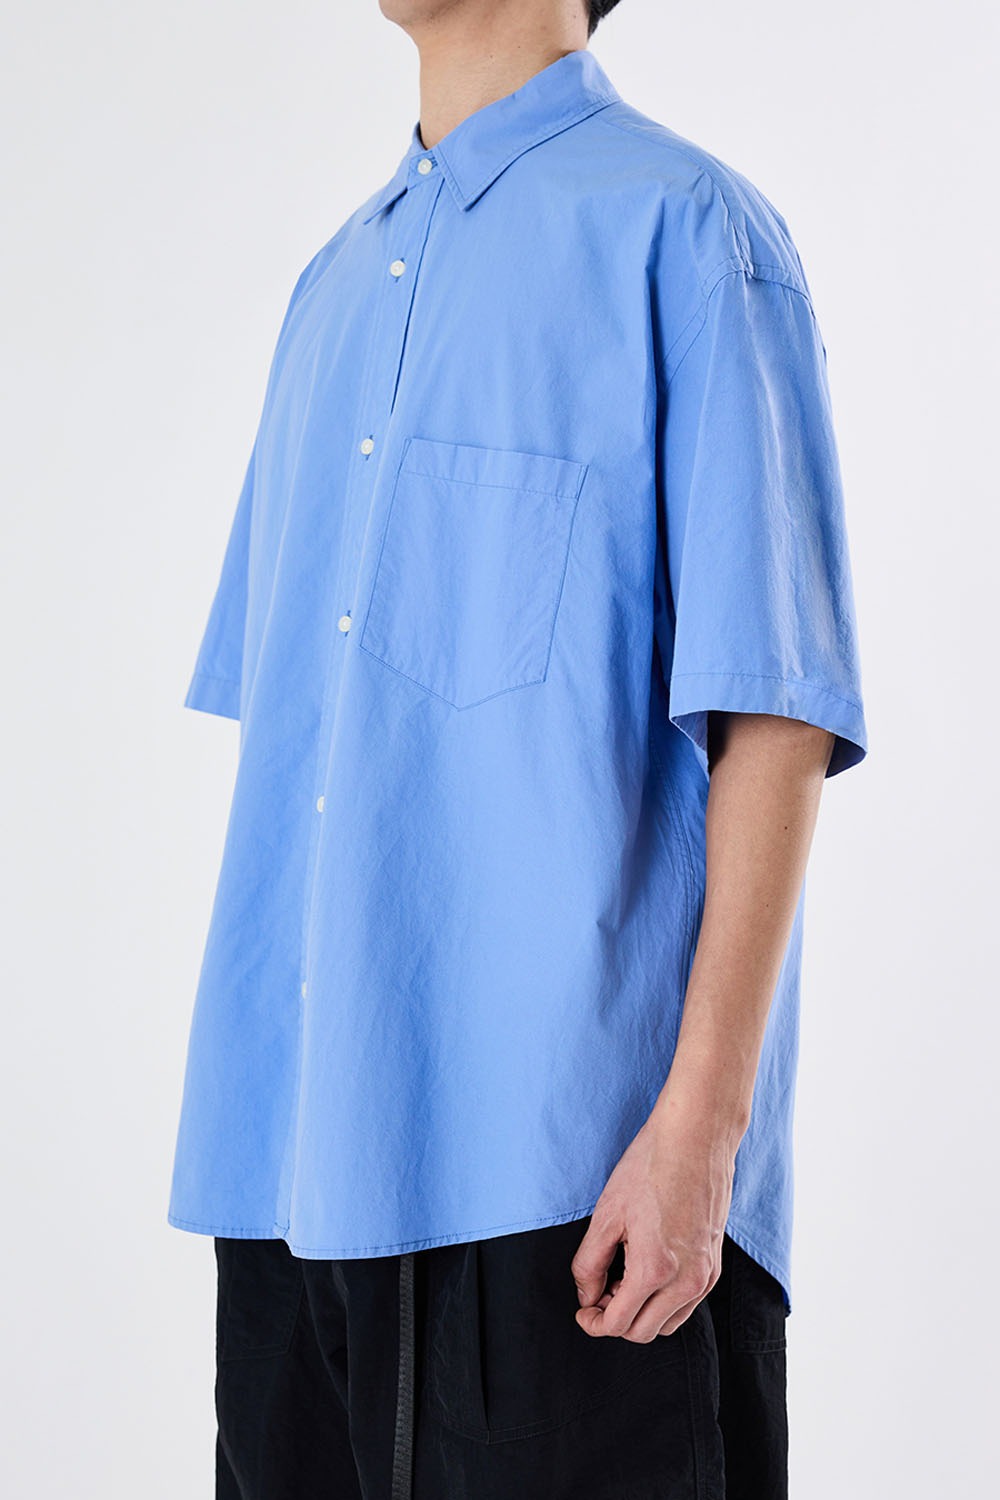 Uniform Half Shirt-Cornflower Blue